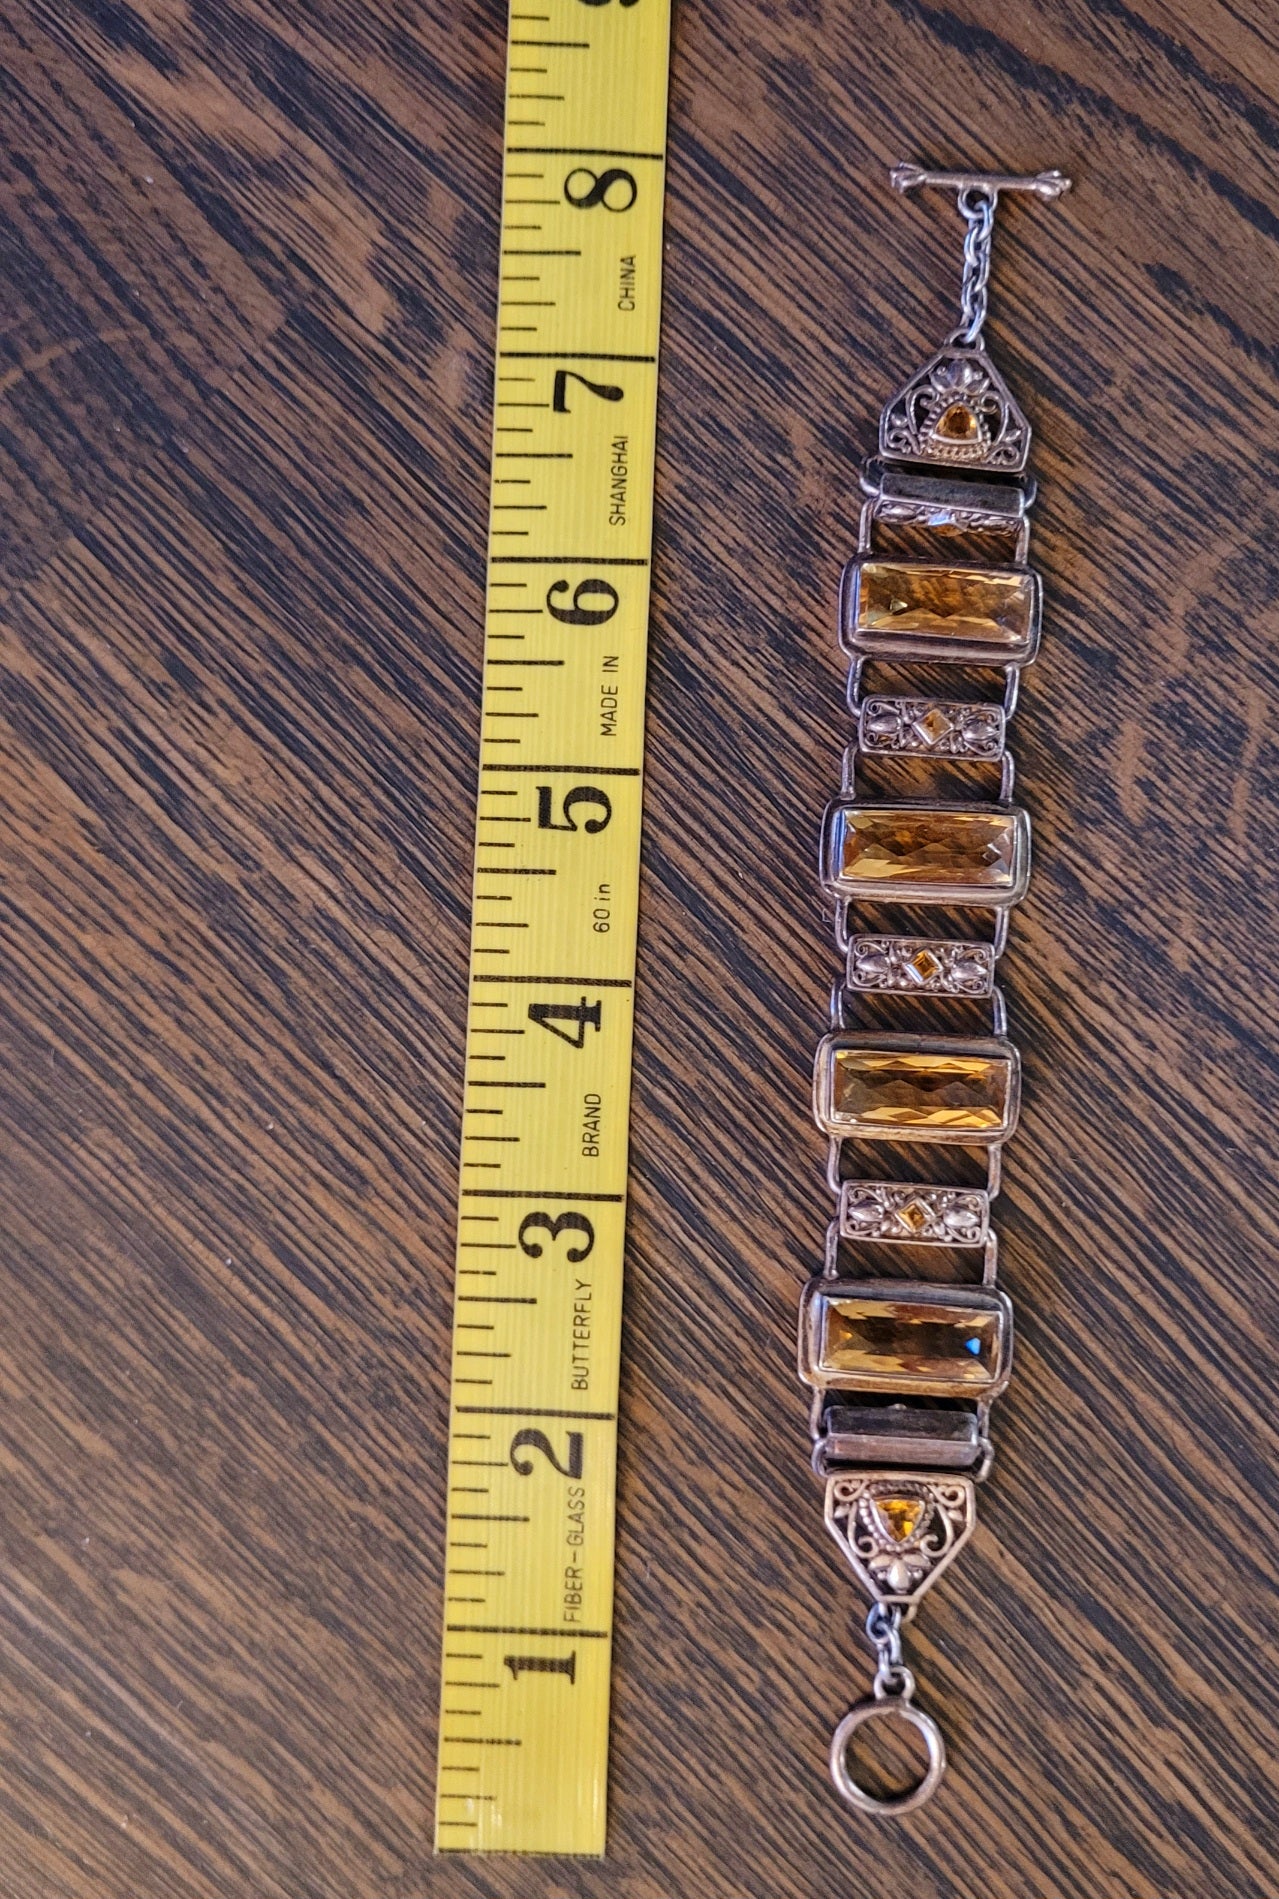 Tibetan Silver bracelet with amber stones